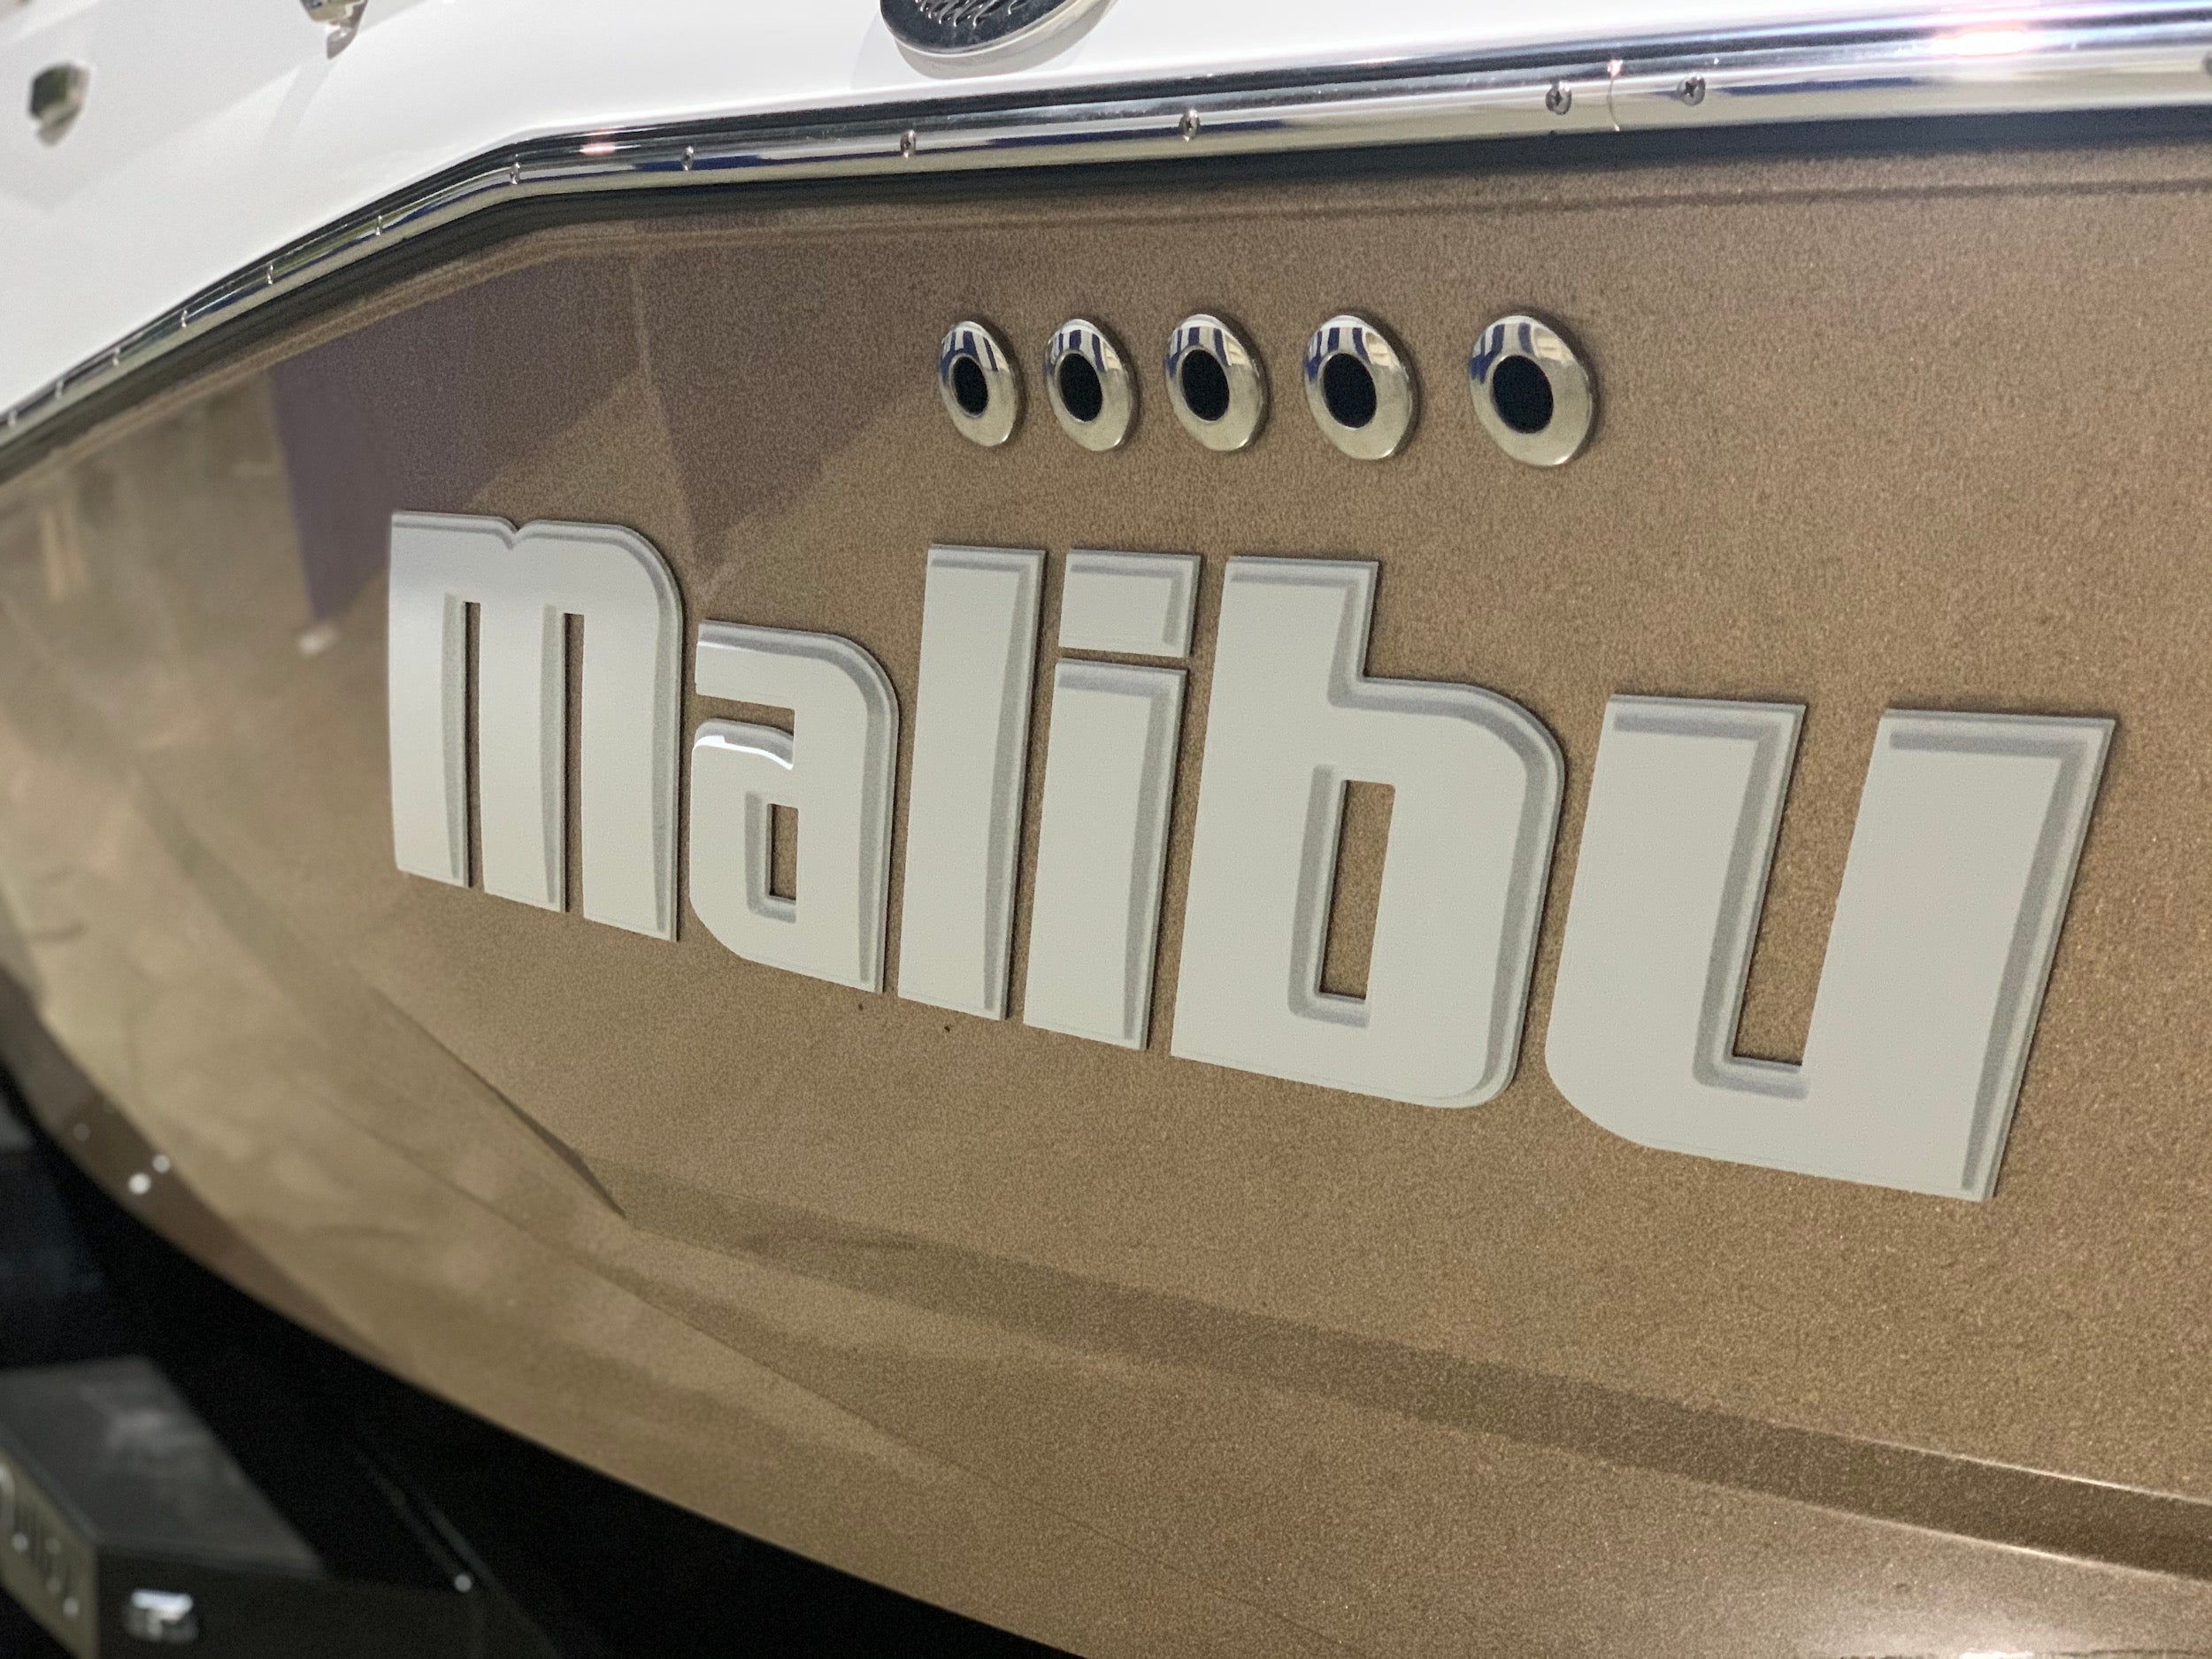 LG Malibu Decal - White (On Boat)